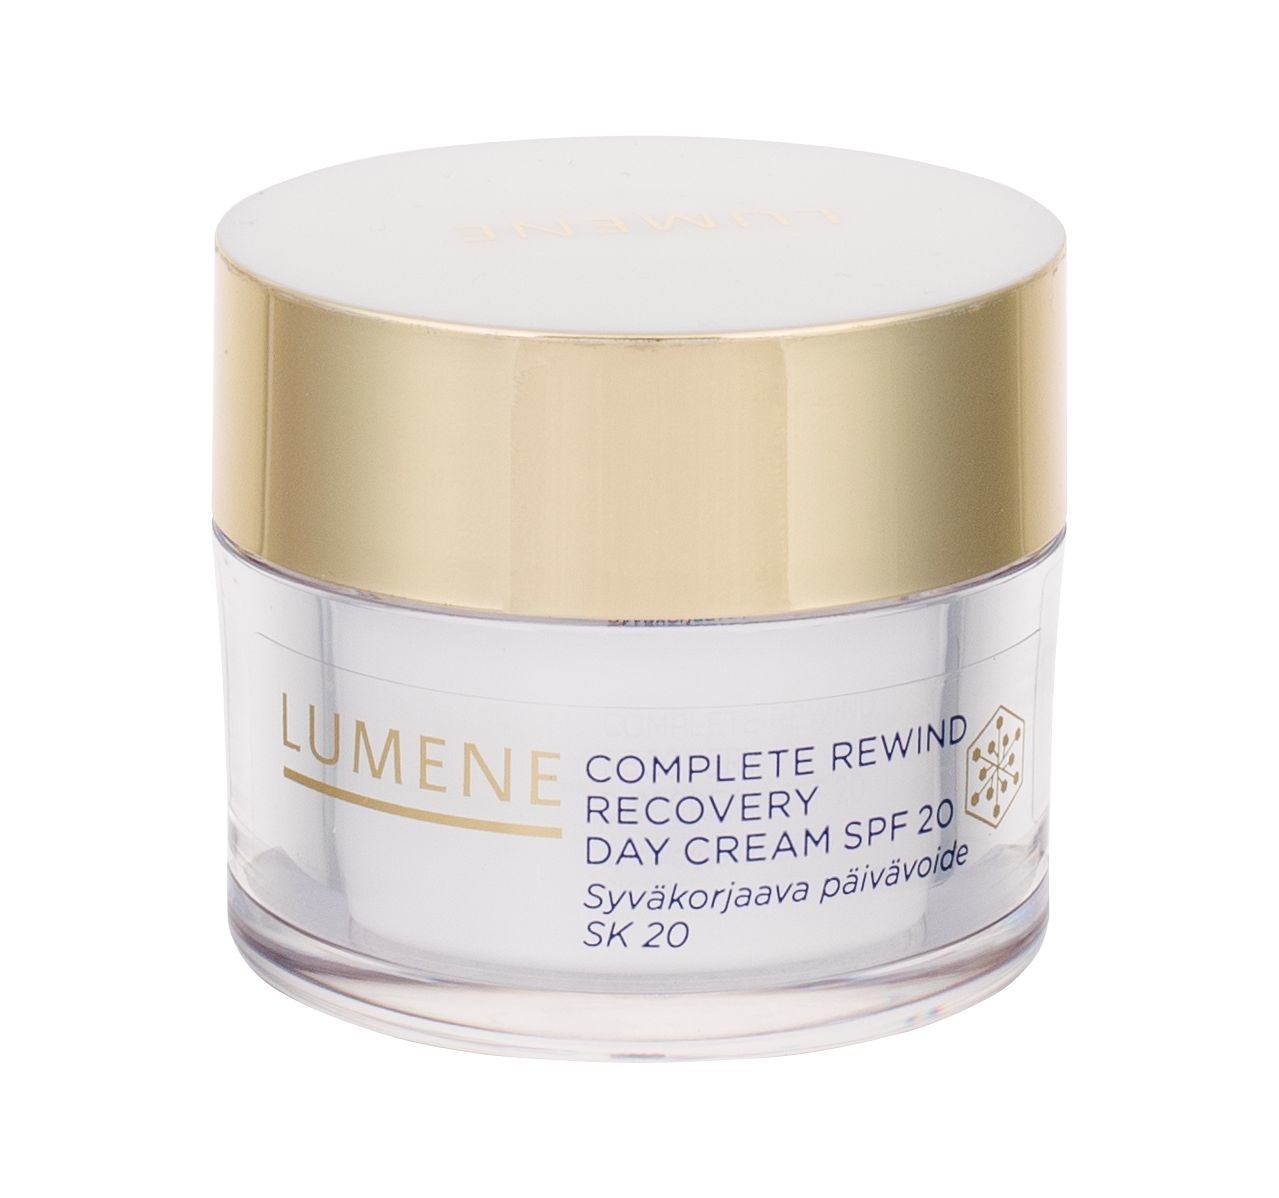 Lumene Complete Rewind Recovery Day Cream SPF20